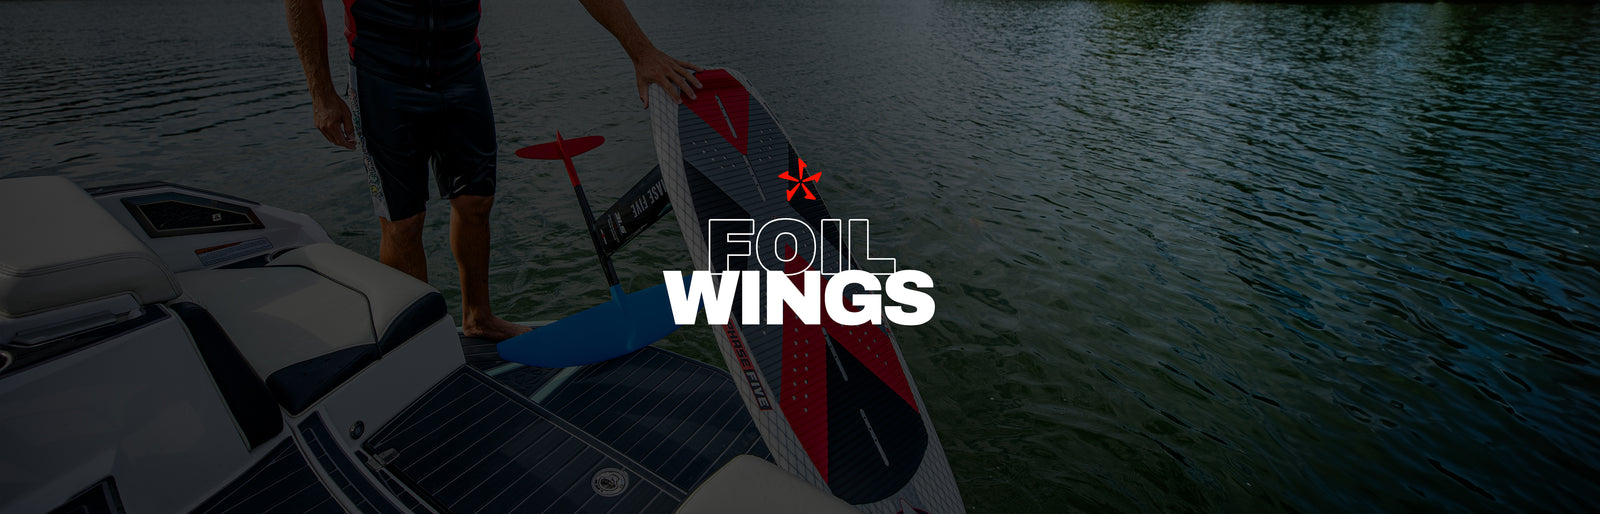 Foil Wings - Phase 5 Wakesurf Boards